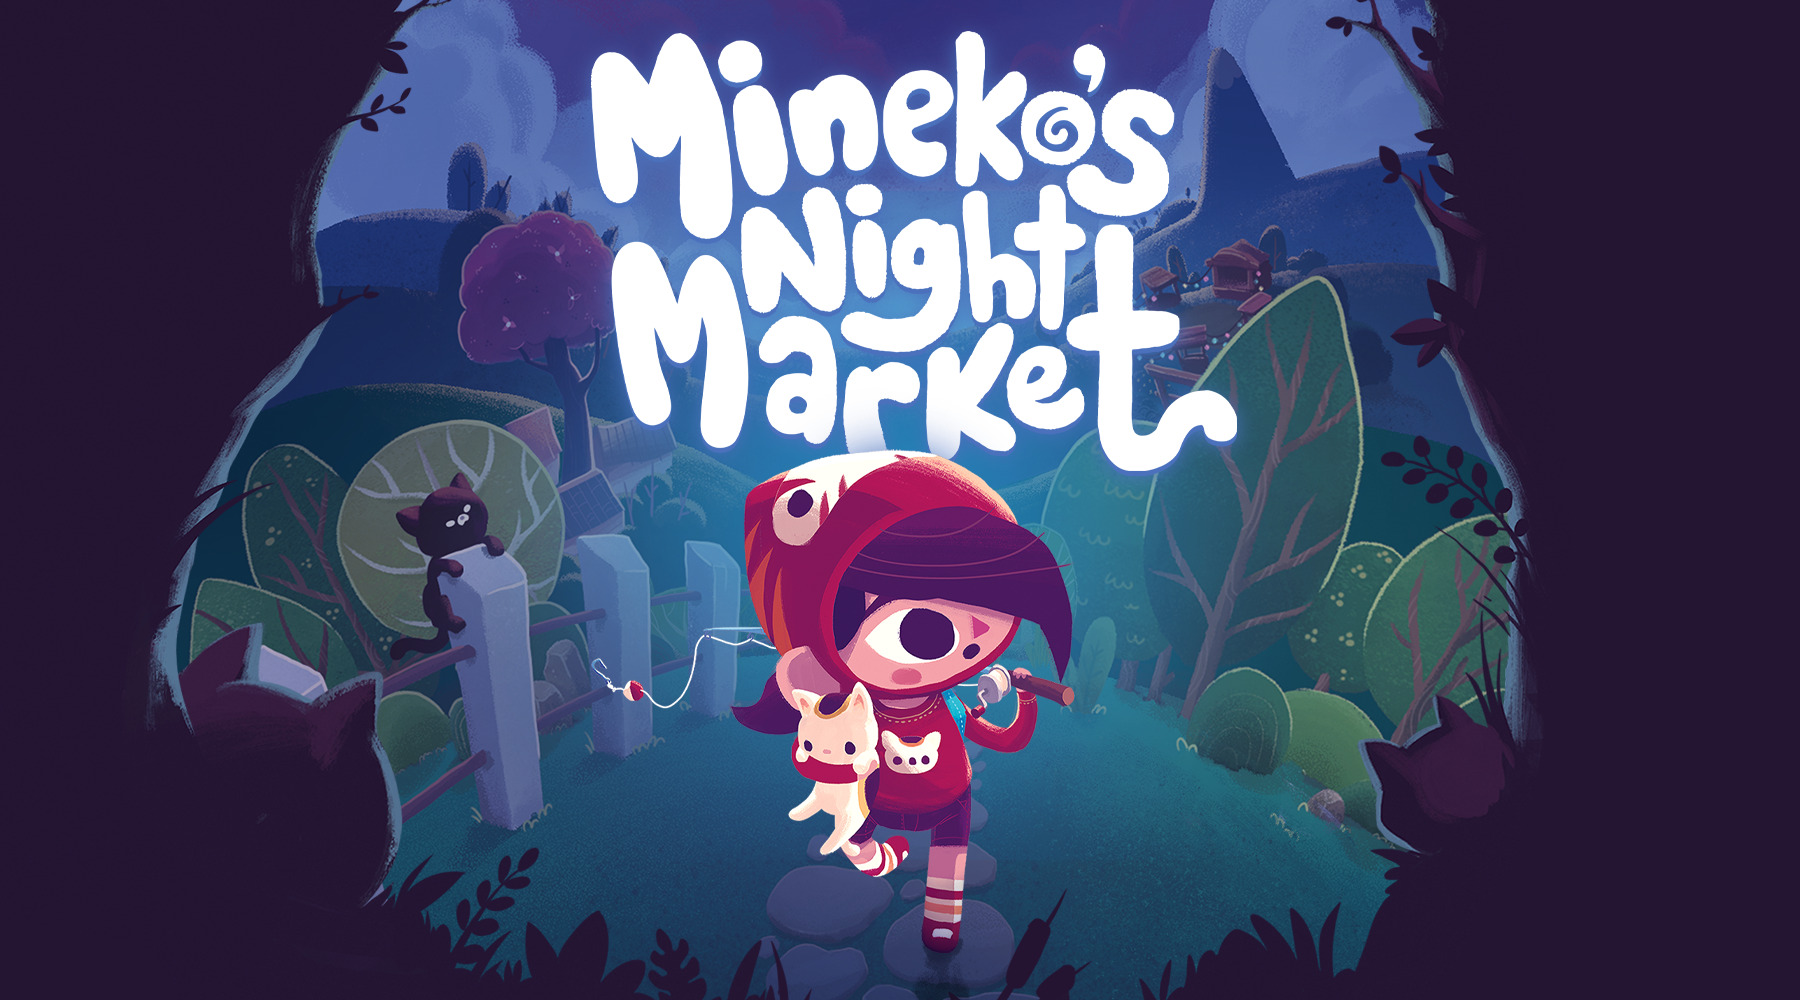 Microsoft confirma que Mineko's Night Market (Multi), Jusant